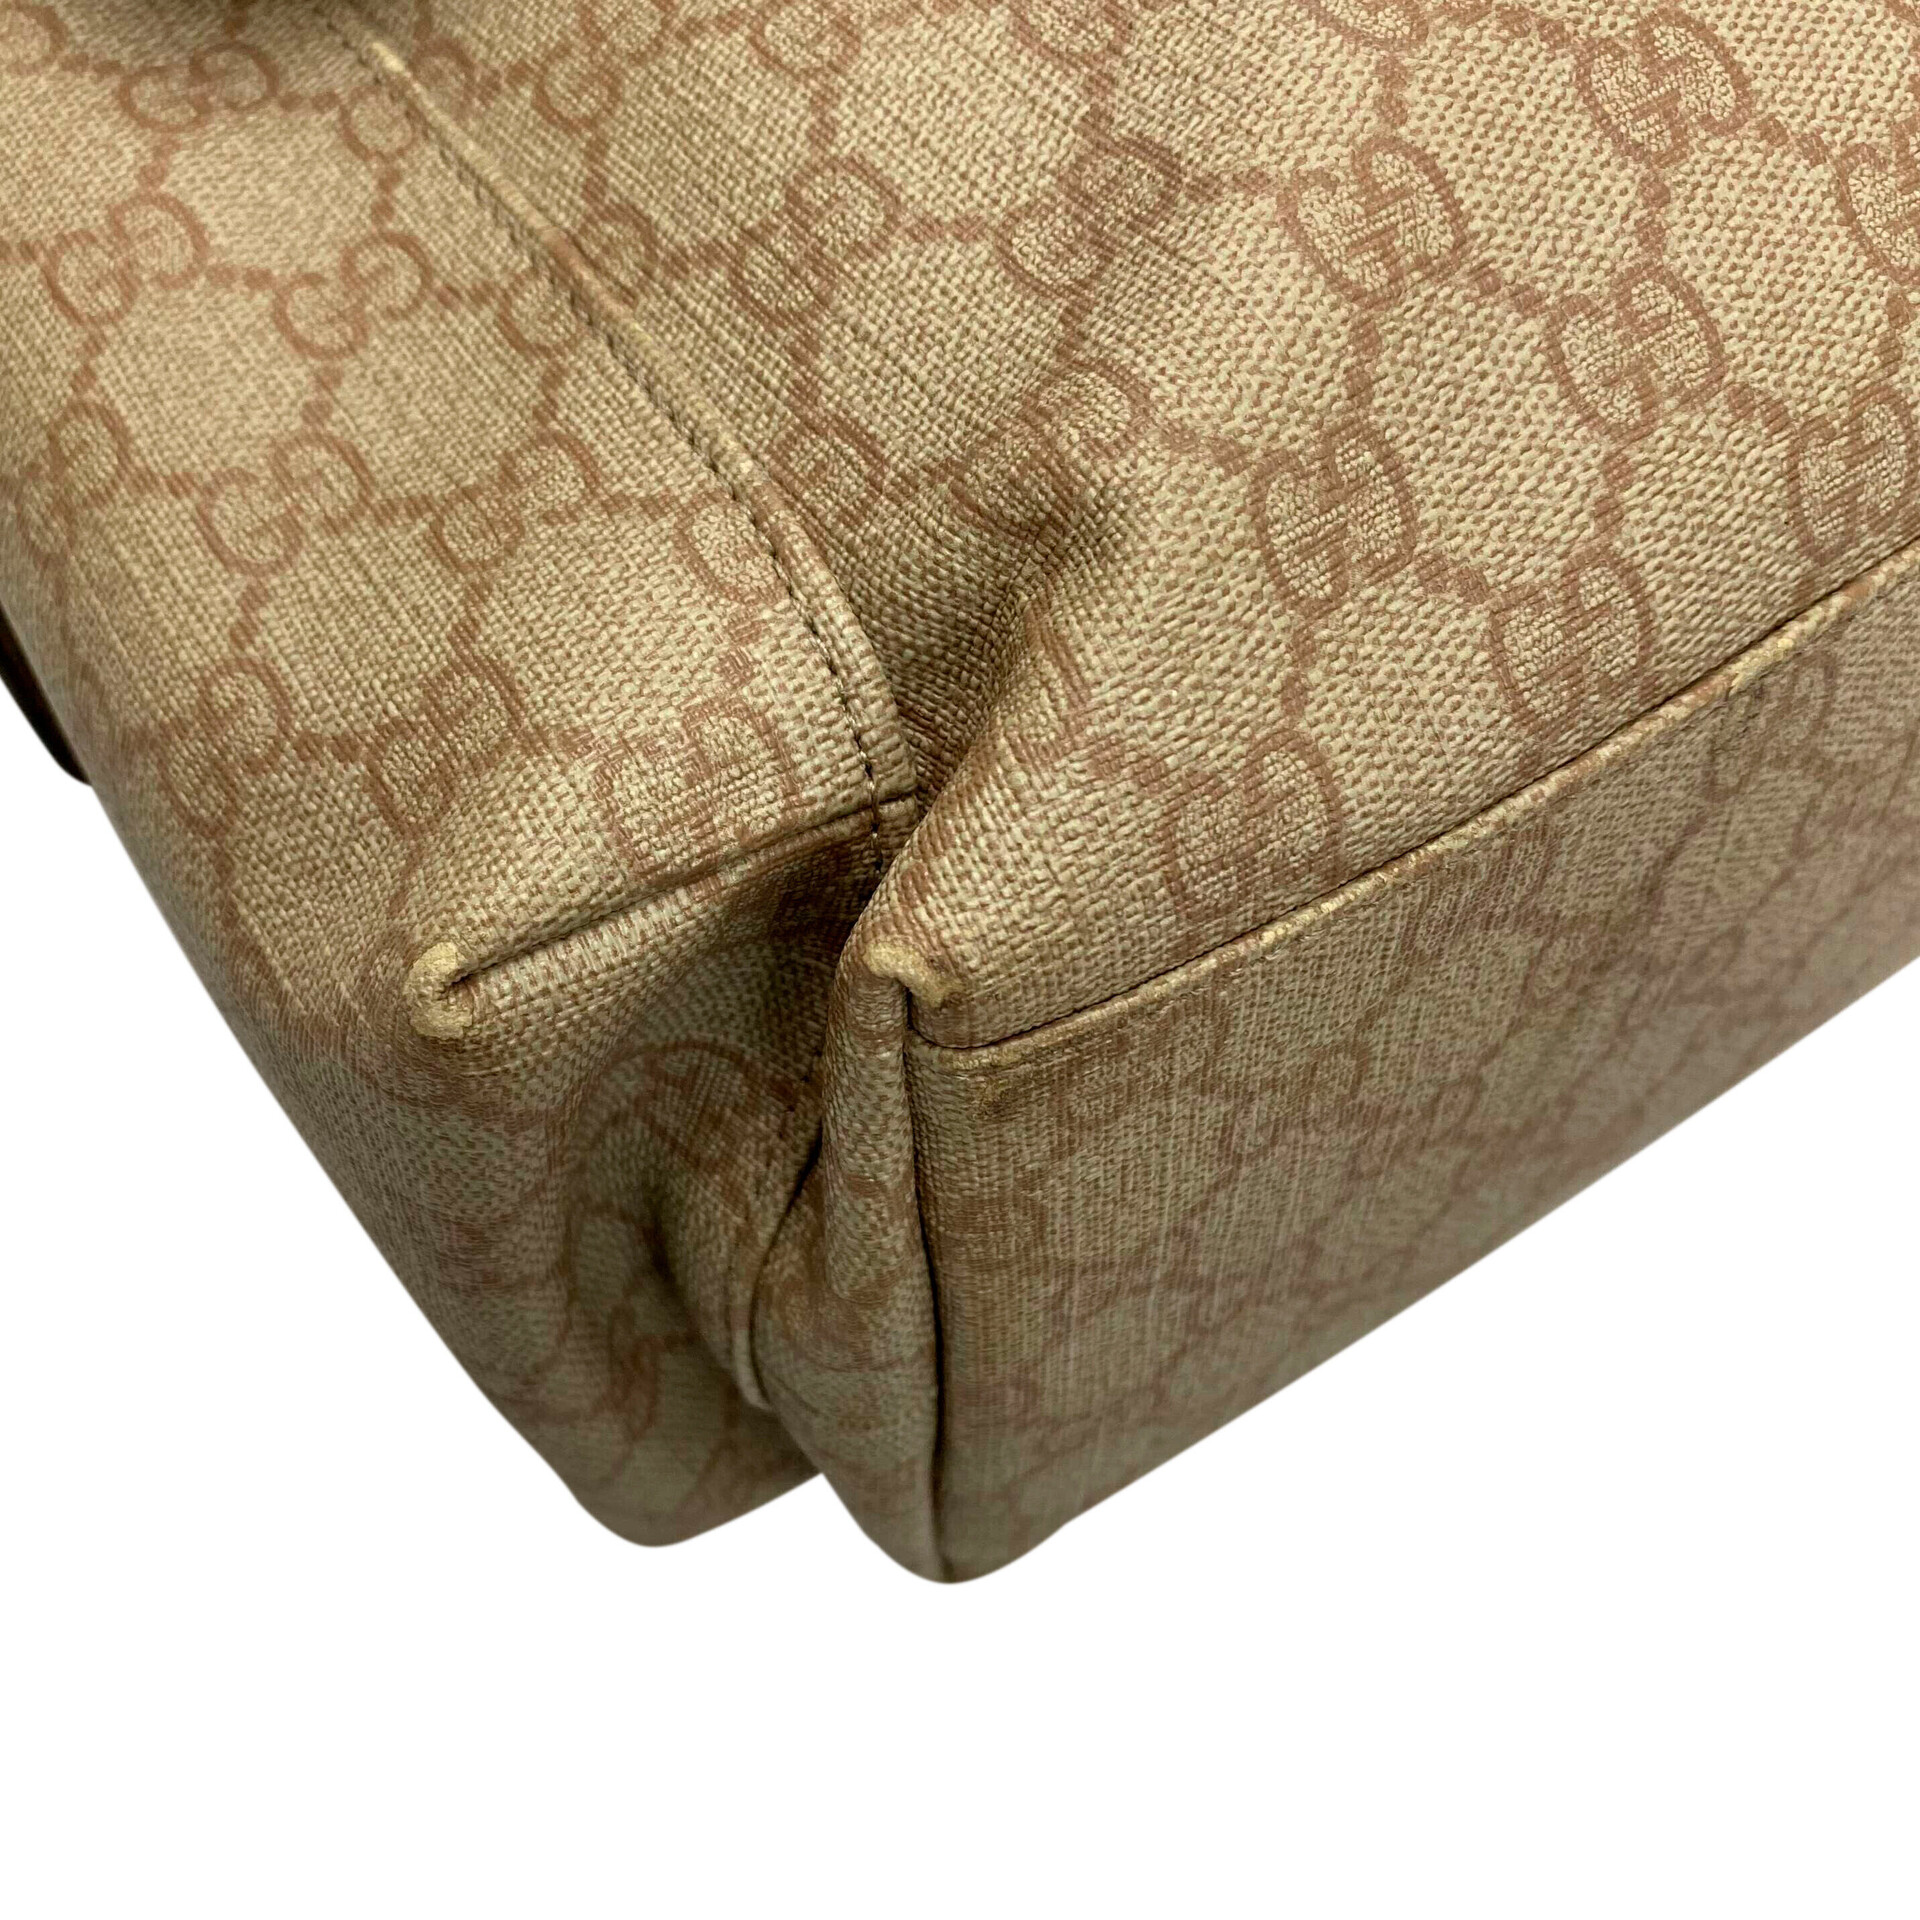 Bolsa Maternidade Gucci GG Plus Diaper Bag